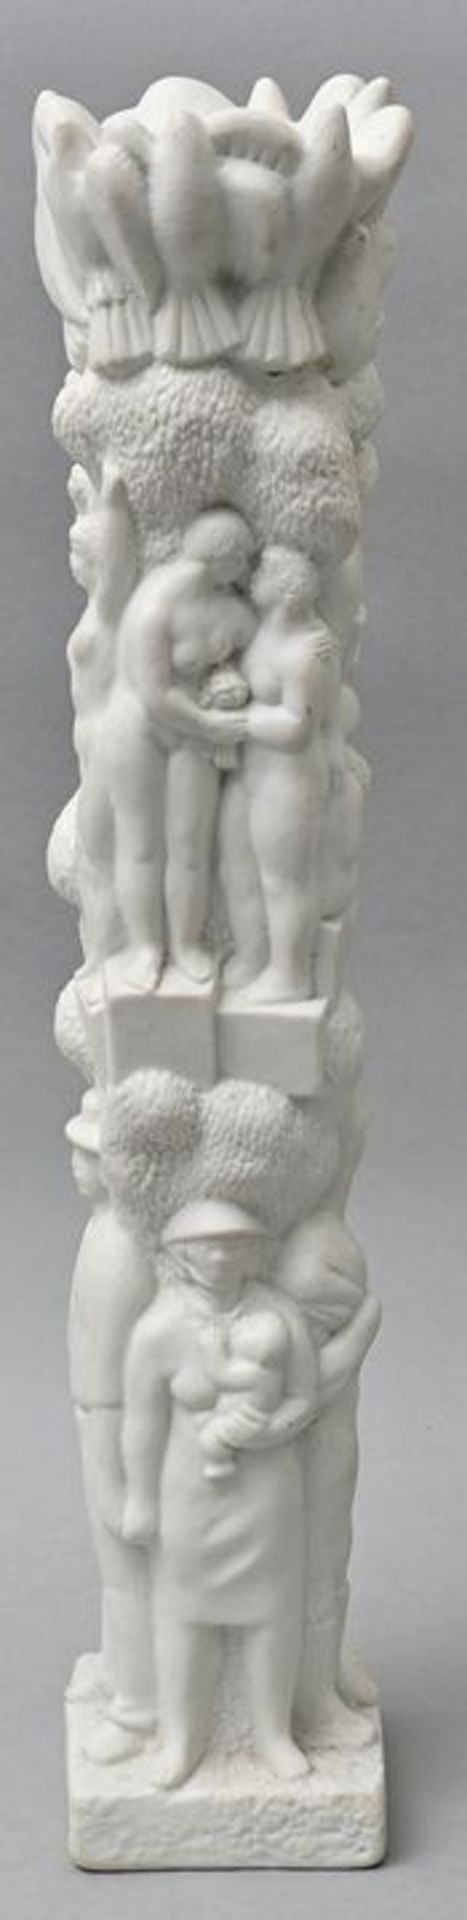 Porzellanplastik/ porcelain sculpture - Image 3 of 7